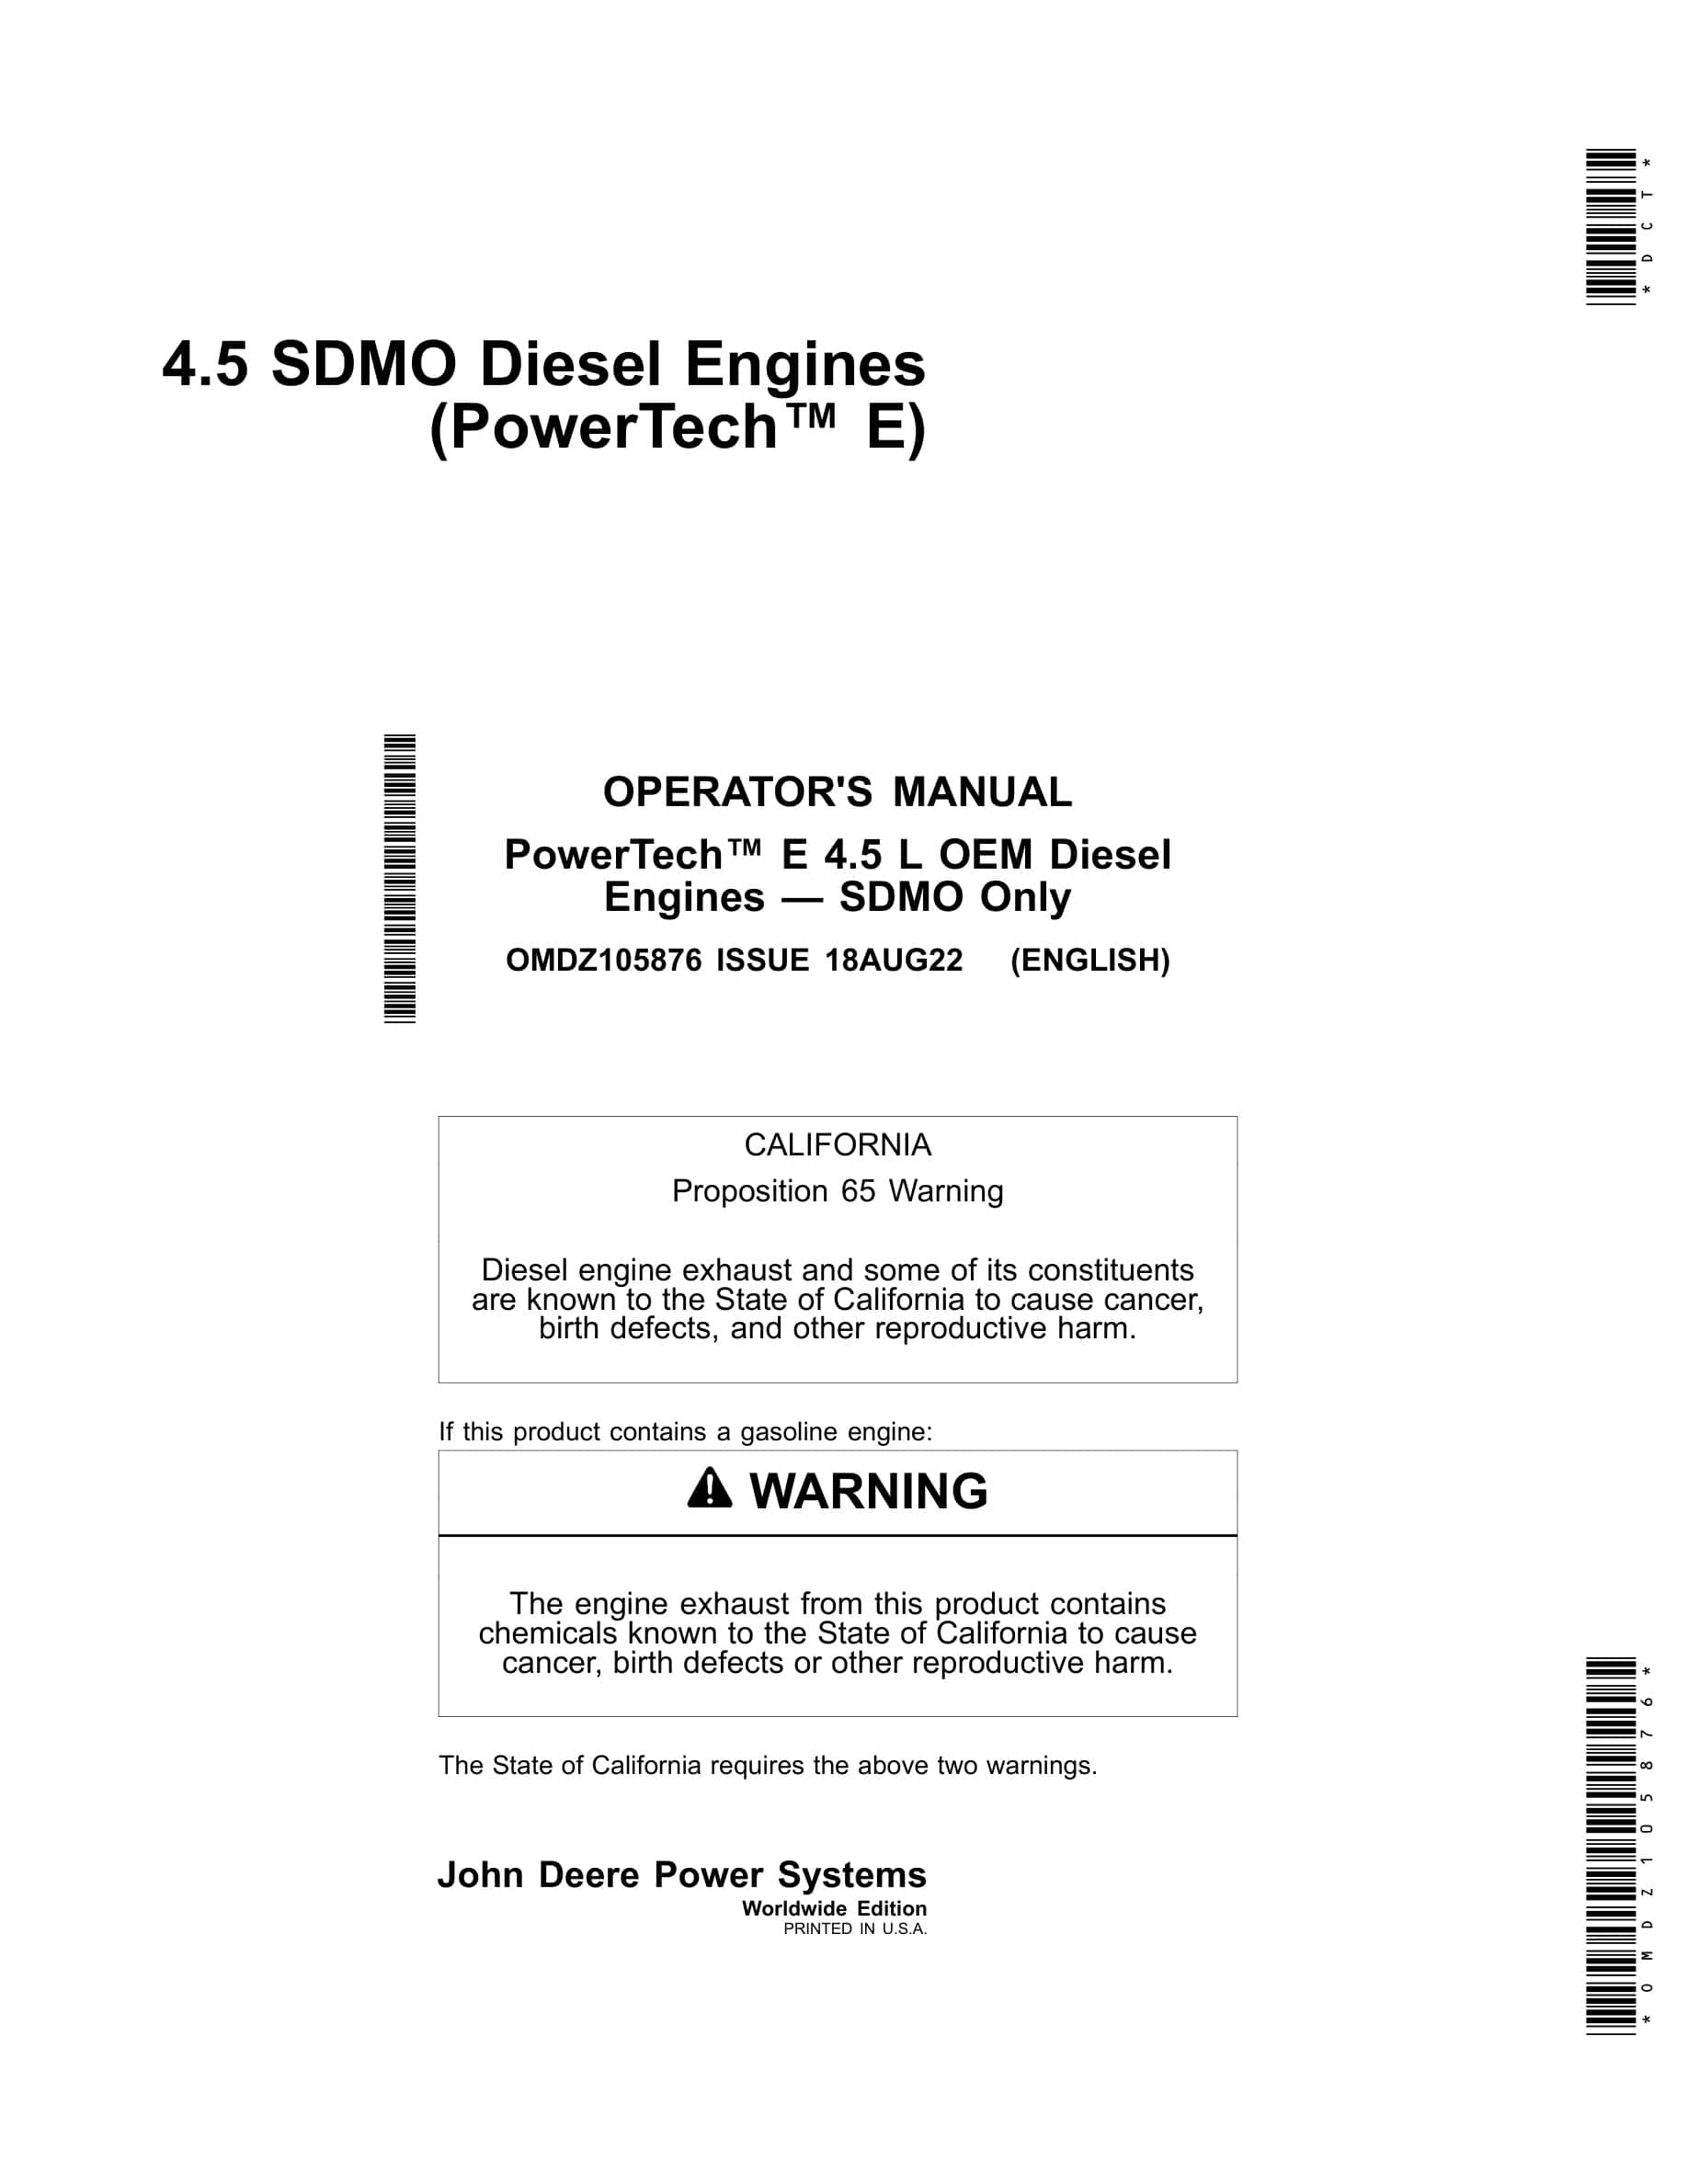 John Deere PowerTech 4.5 SDMO Diesel Engines Operator Manual OMDZ105876-1